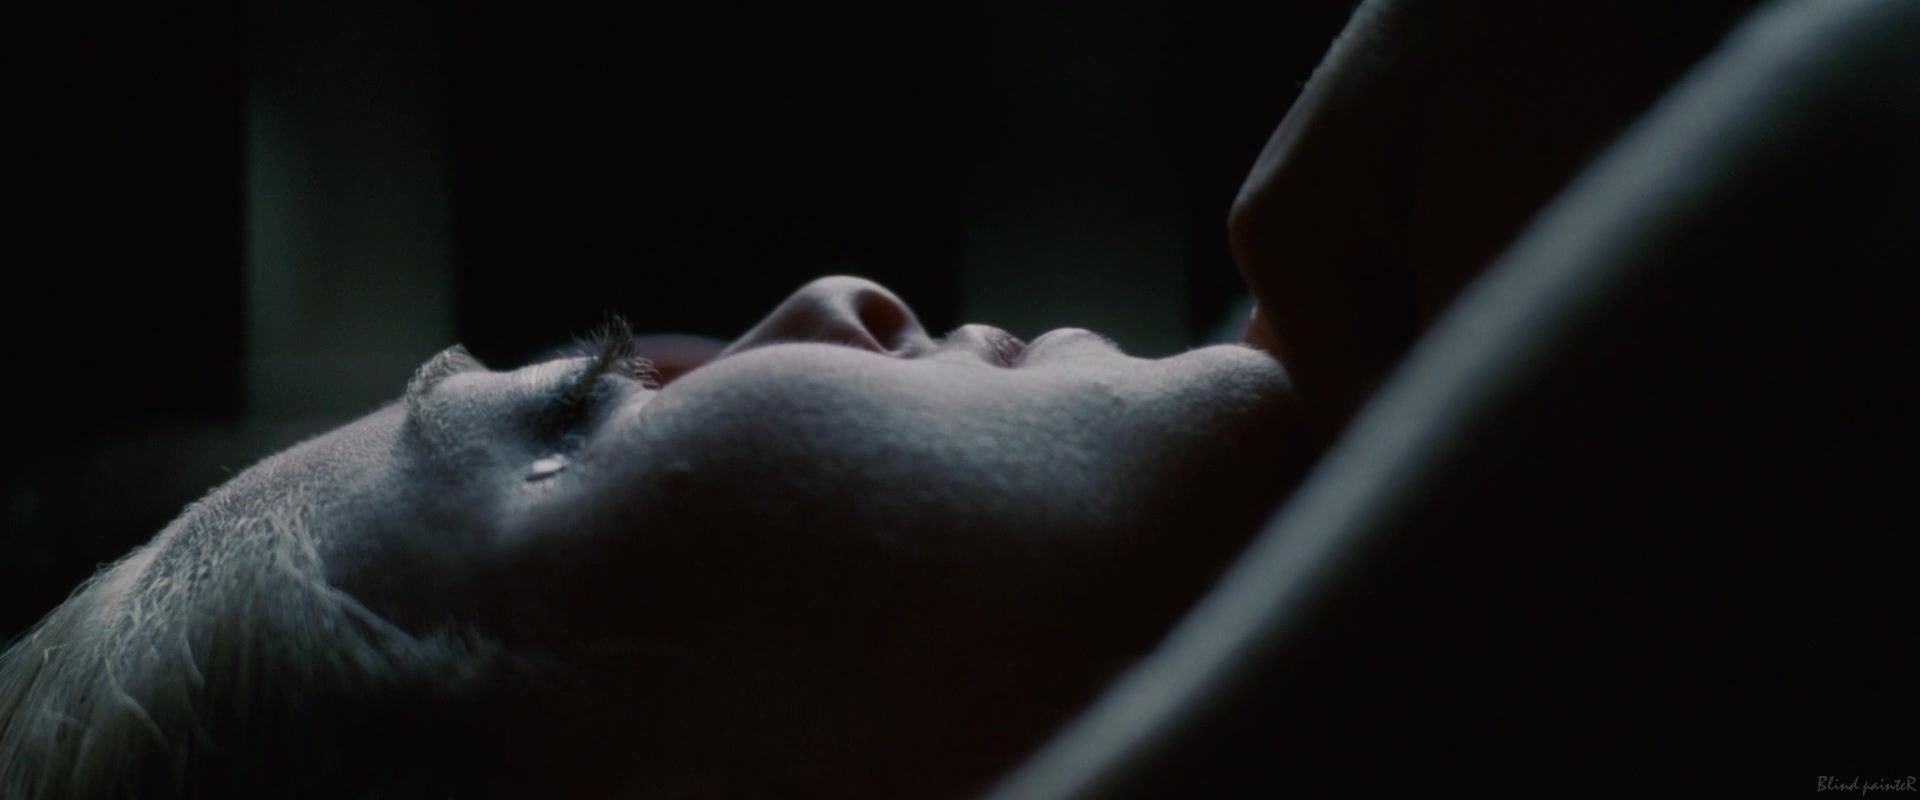 First Time Amanda Seyfried nude - Dear John (2010) Spandex - 1